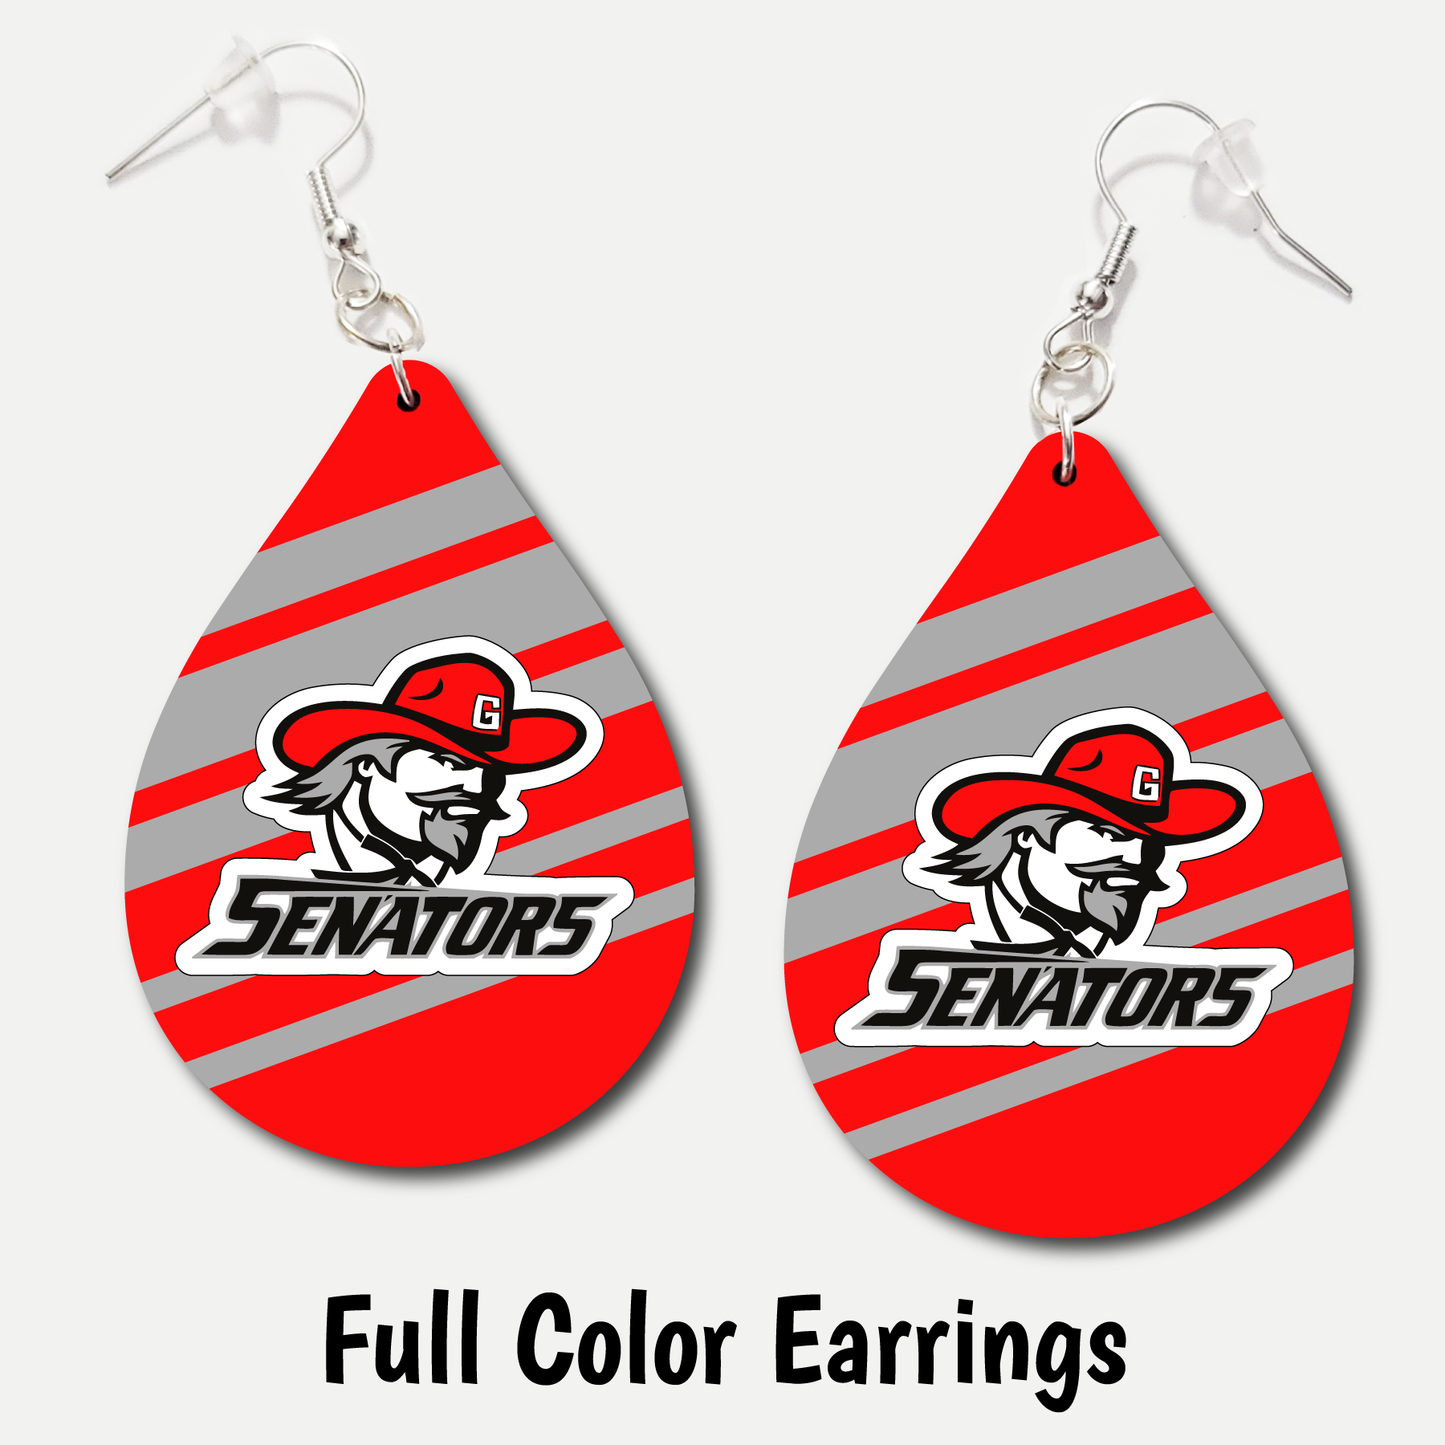 Gooding Senators - Full Color Earrings